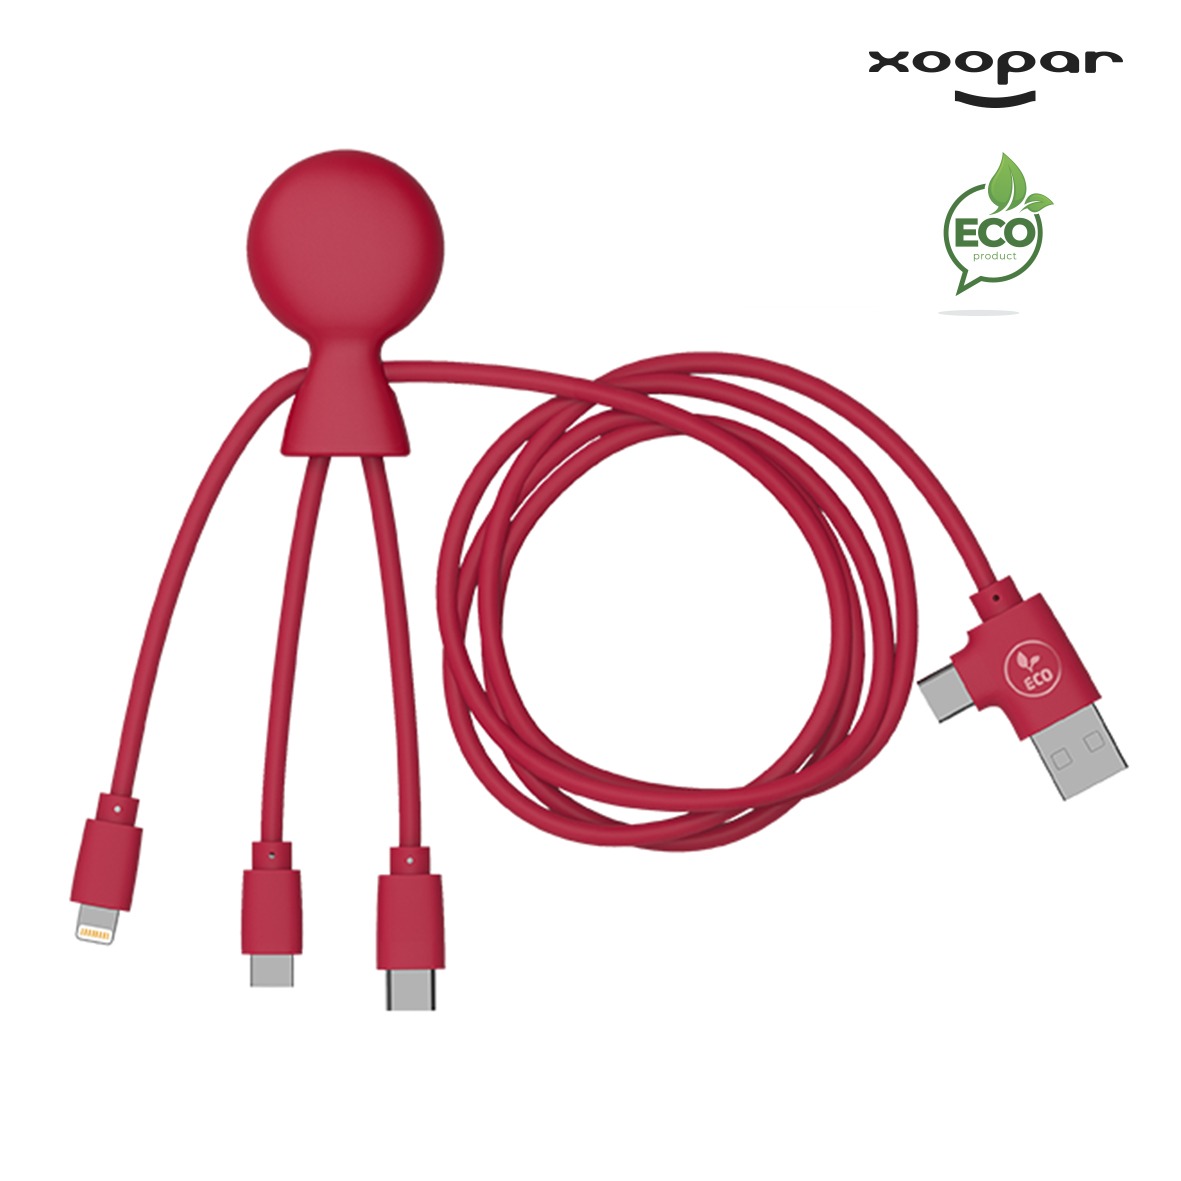 Cable multi connectiques – Mr bio Long recycle Xoopar personnalise-6